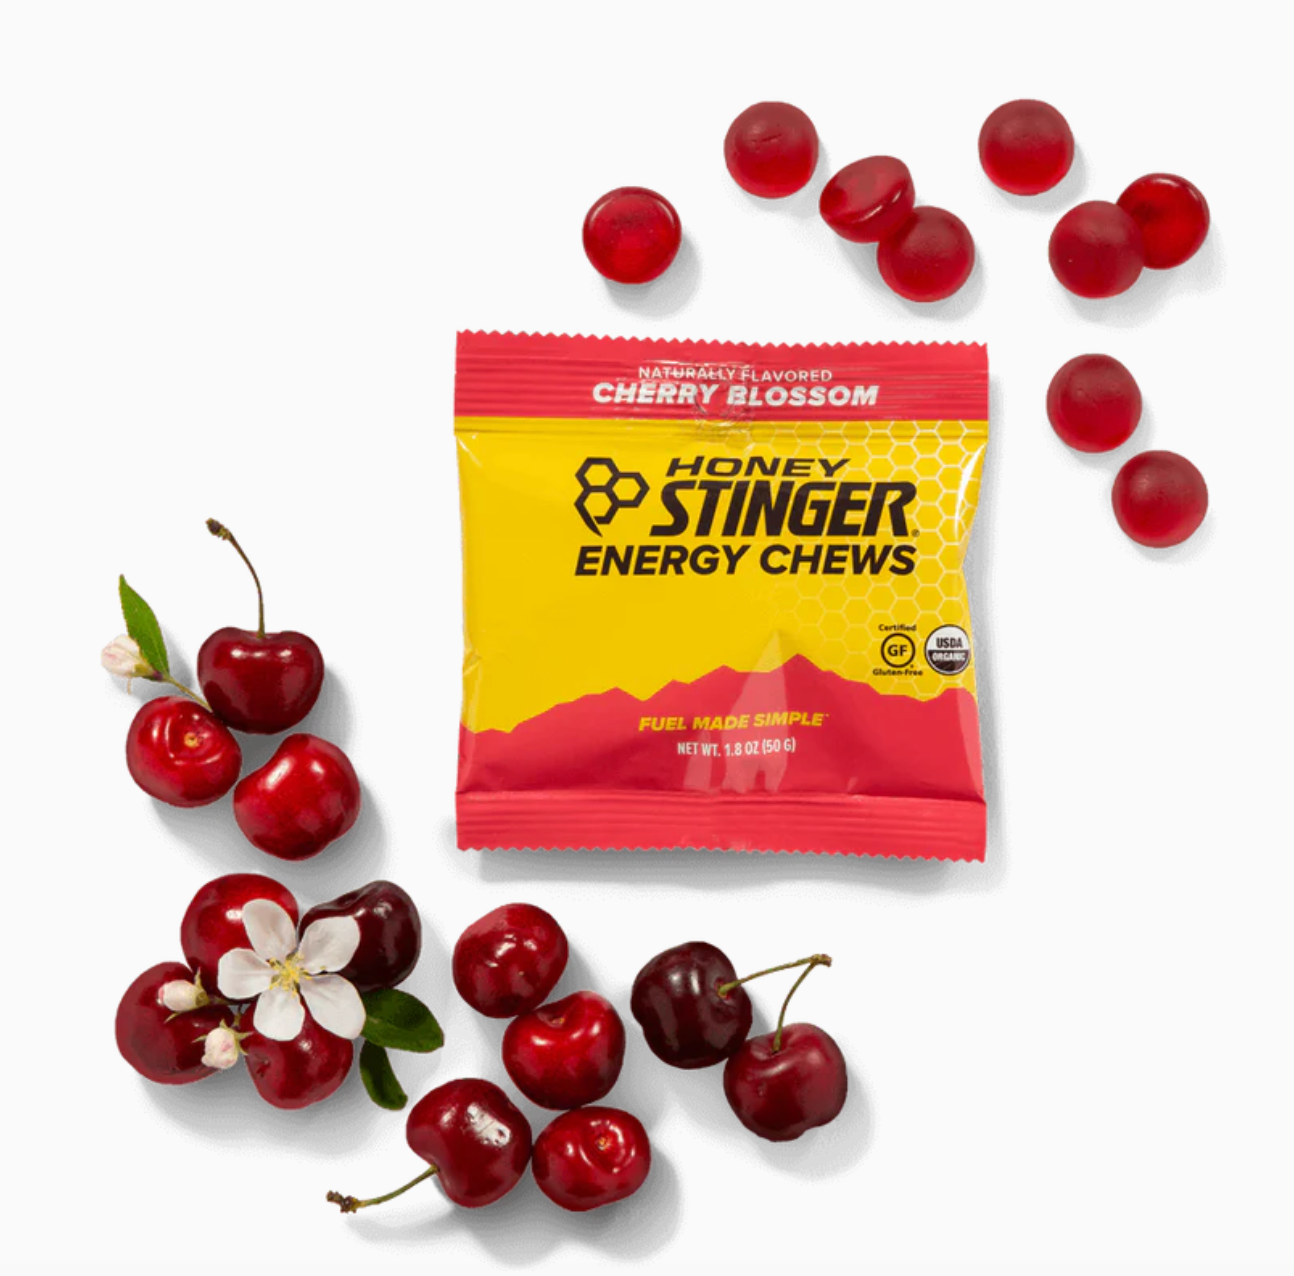 Cherry Blossom Energy Chews